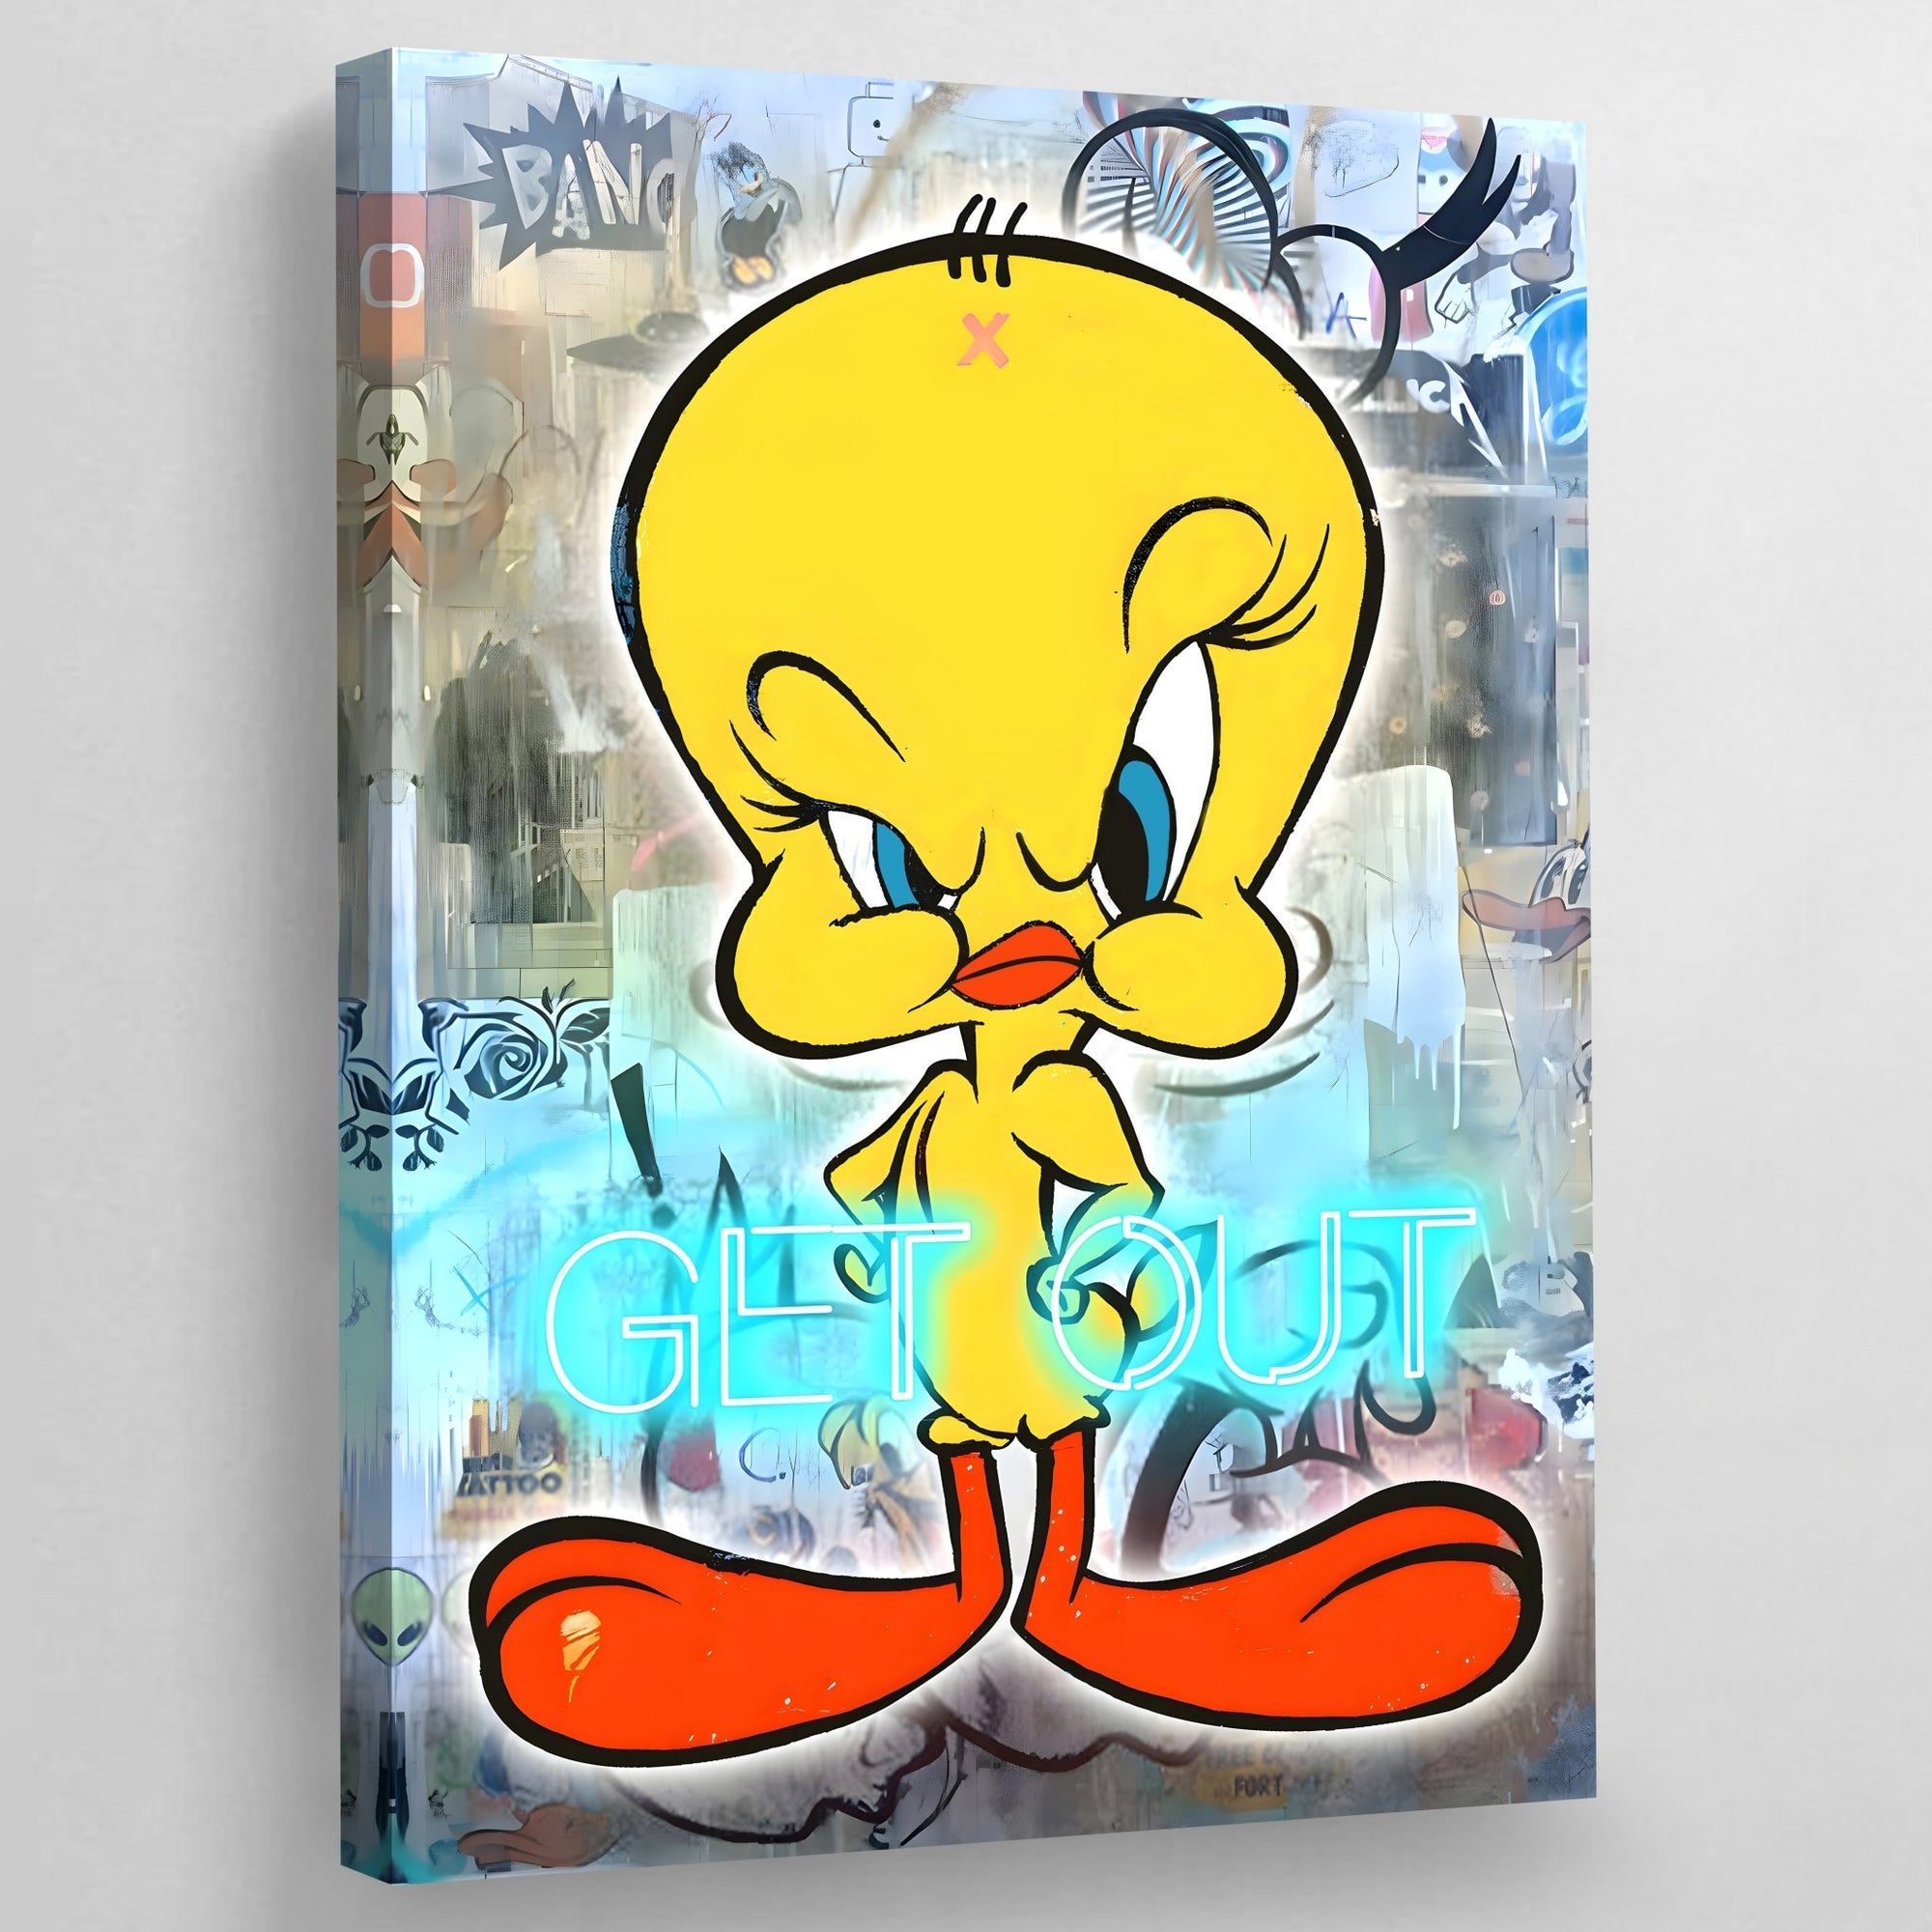 Bird Pop Art Canvas - The Trendy Art